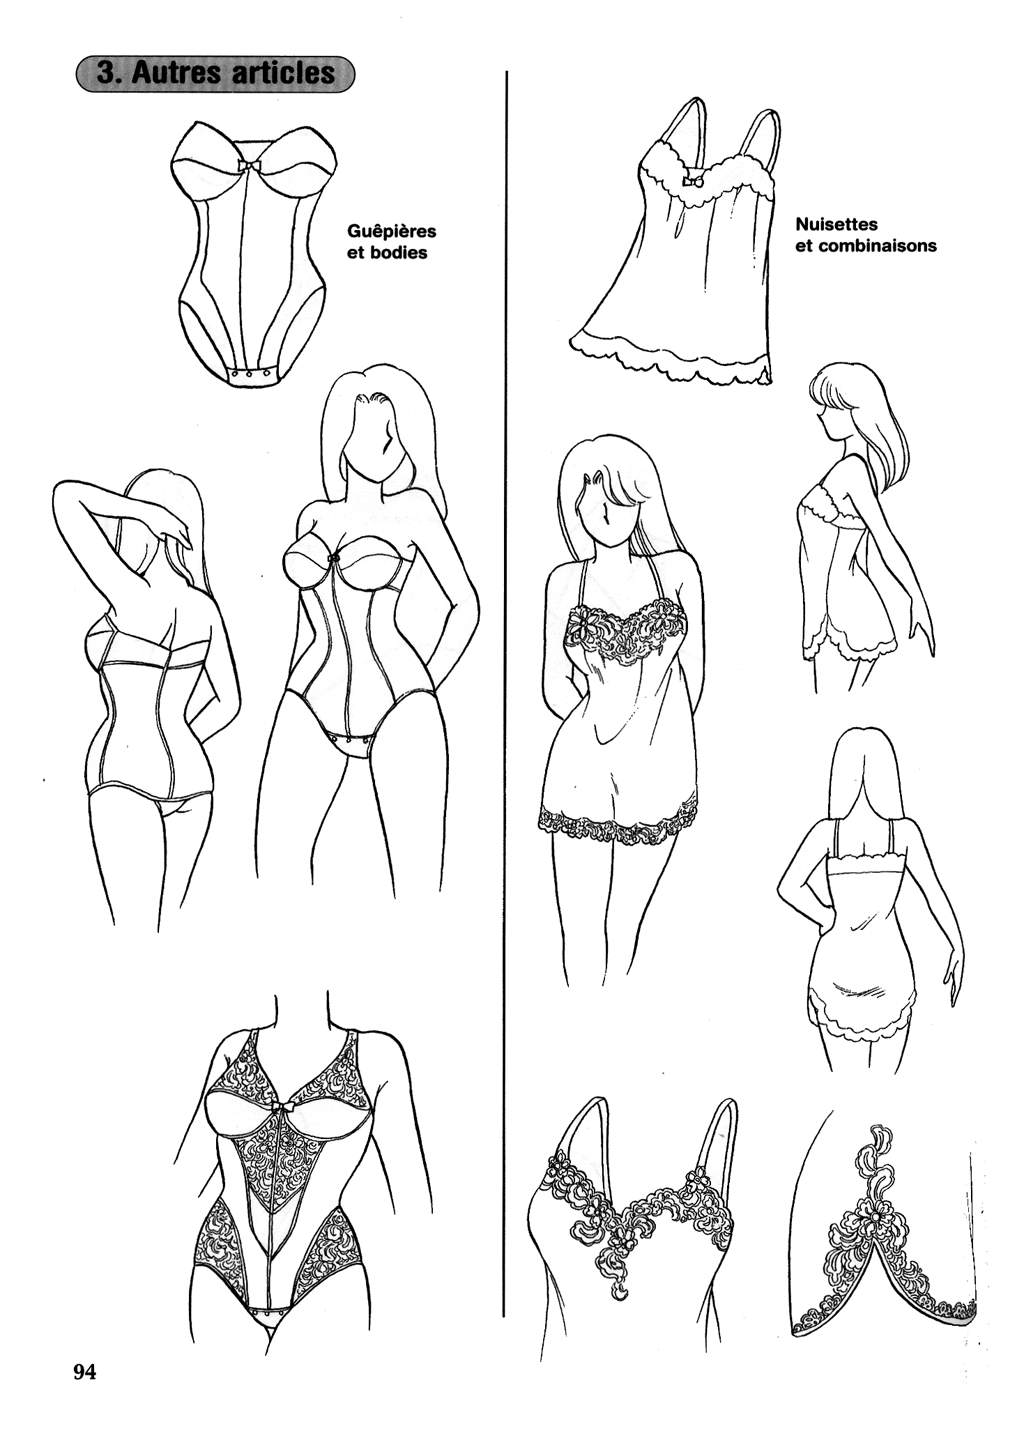 Le dessin du Manga 04 - Personnages feminin, Attitudes, Expressions numero d'image 94